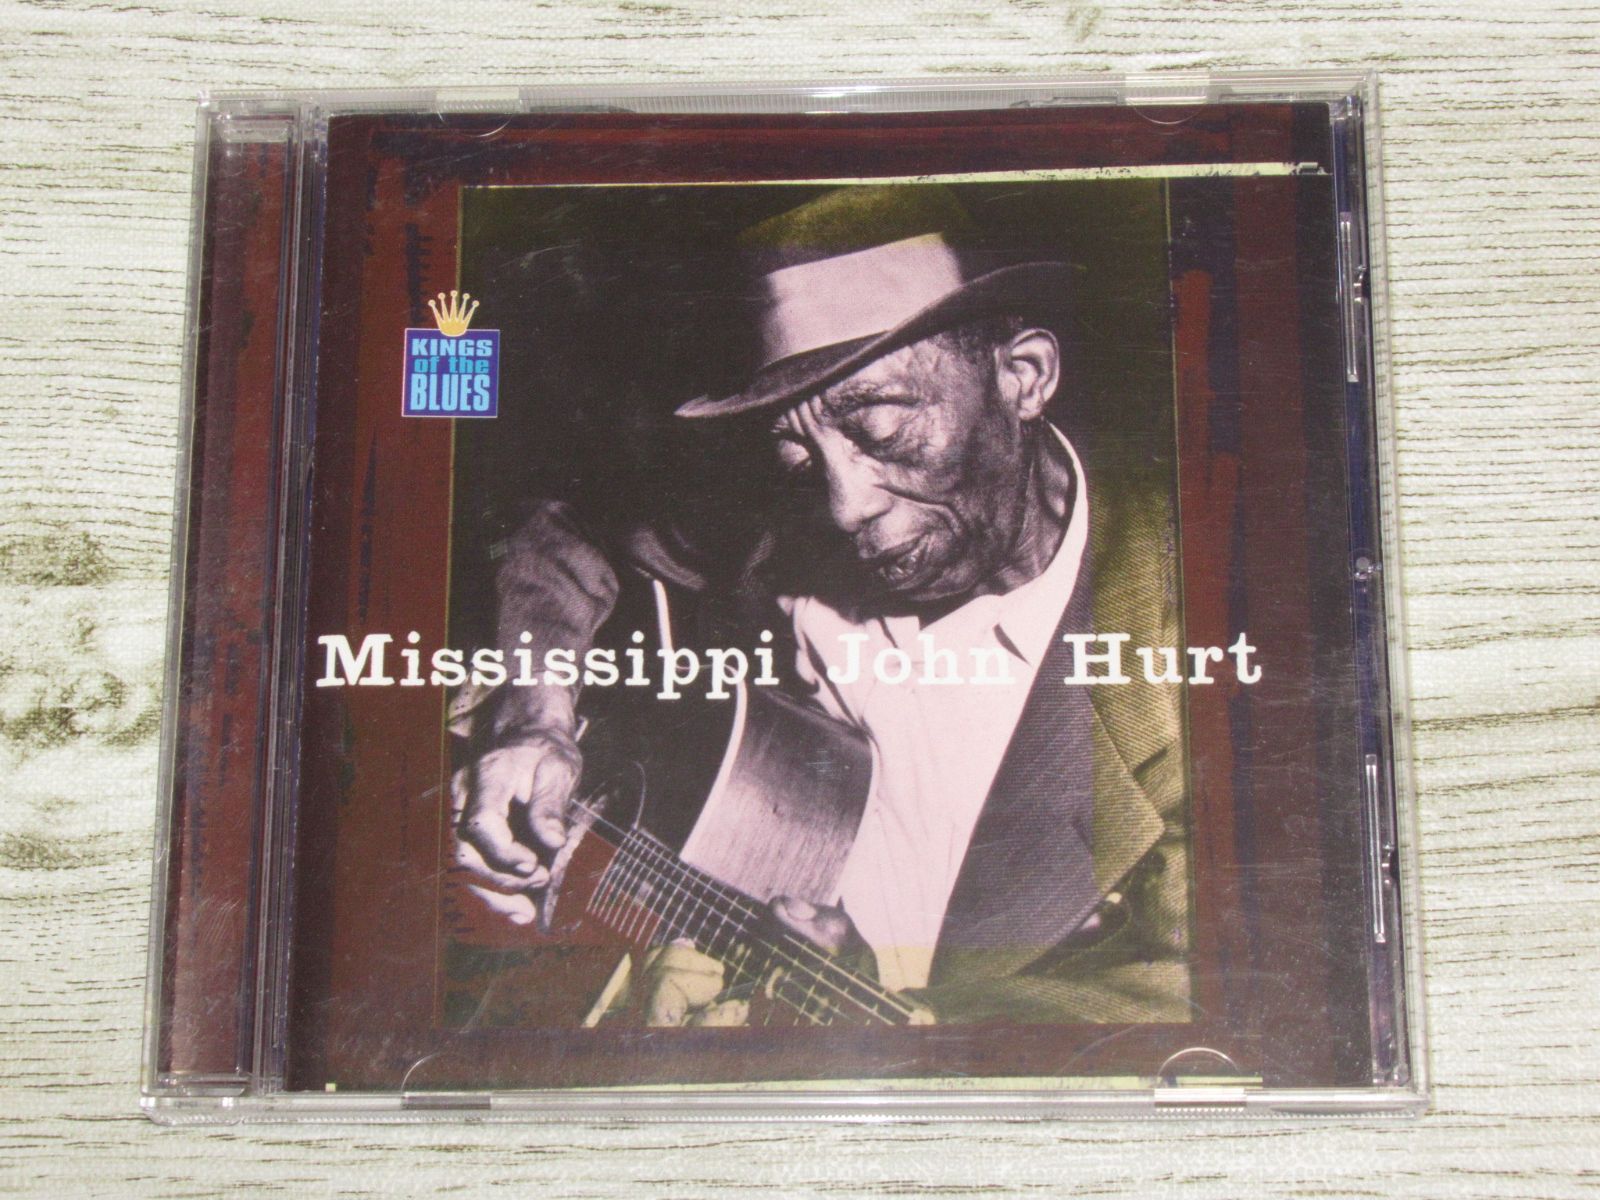 CD MISSISSIPPI JOHN HURT KINGS OF THE BLUES 全21曲 ミシシッピ・ジョン・ハート FELICE  MUSIC 71 メルカリ